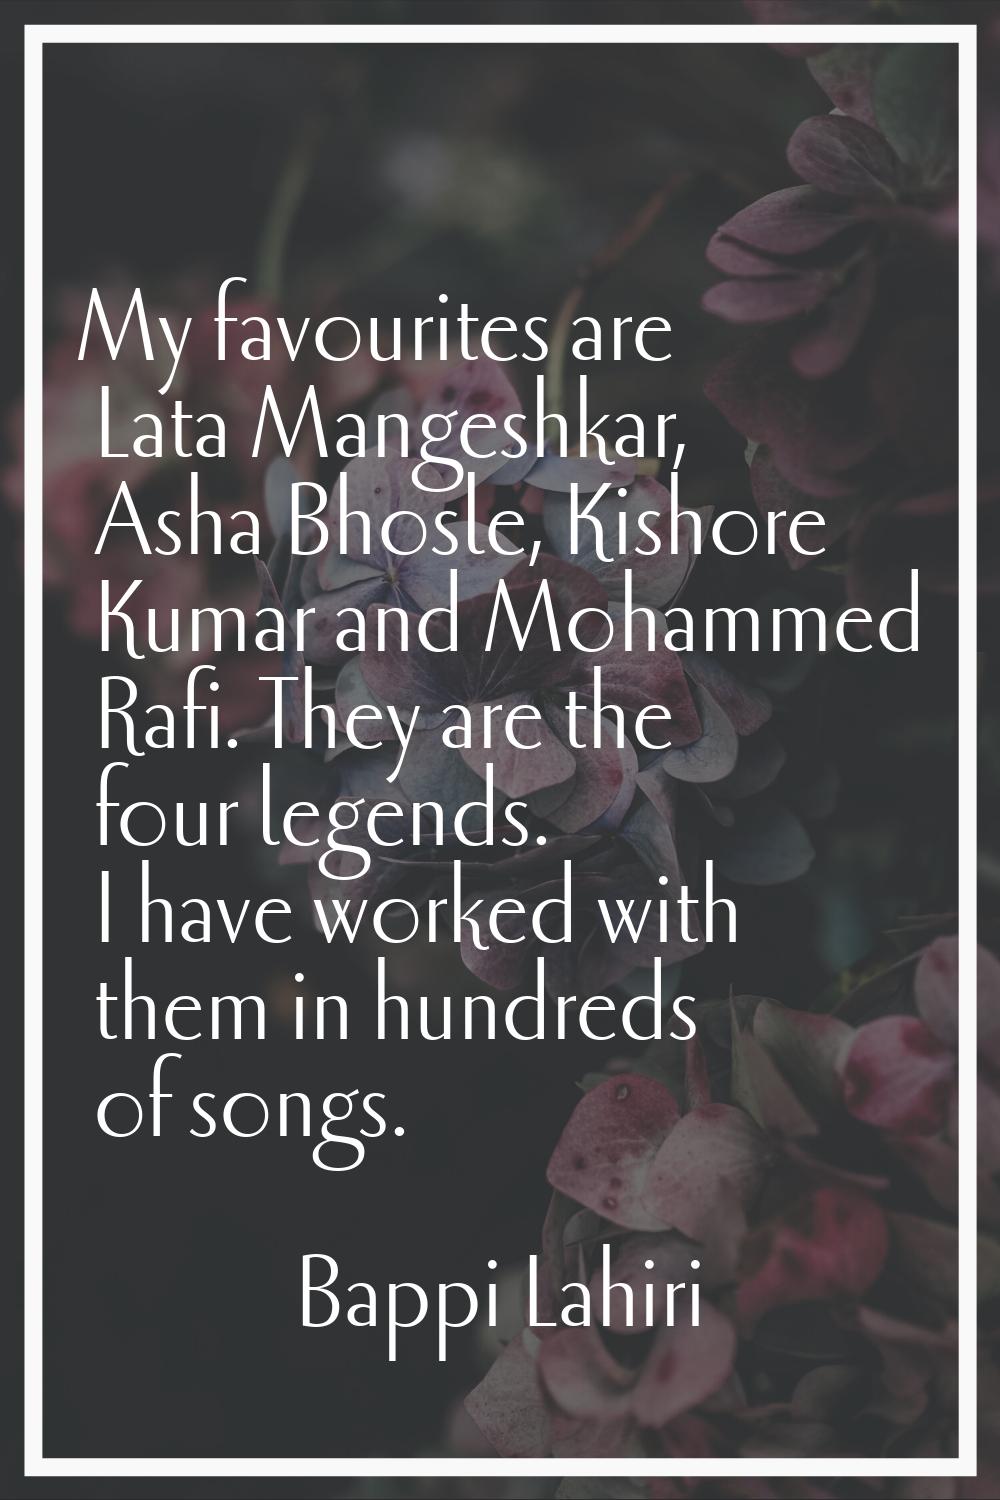 My favourites are Lata Mangeshkar, Asha Bhosle, Kishore Kumar and Mohammed Rafi. They are the four 